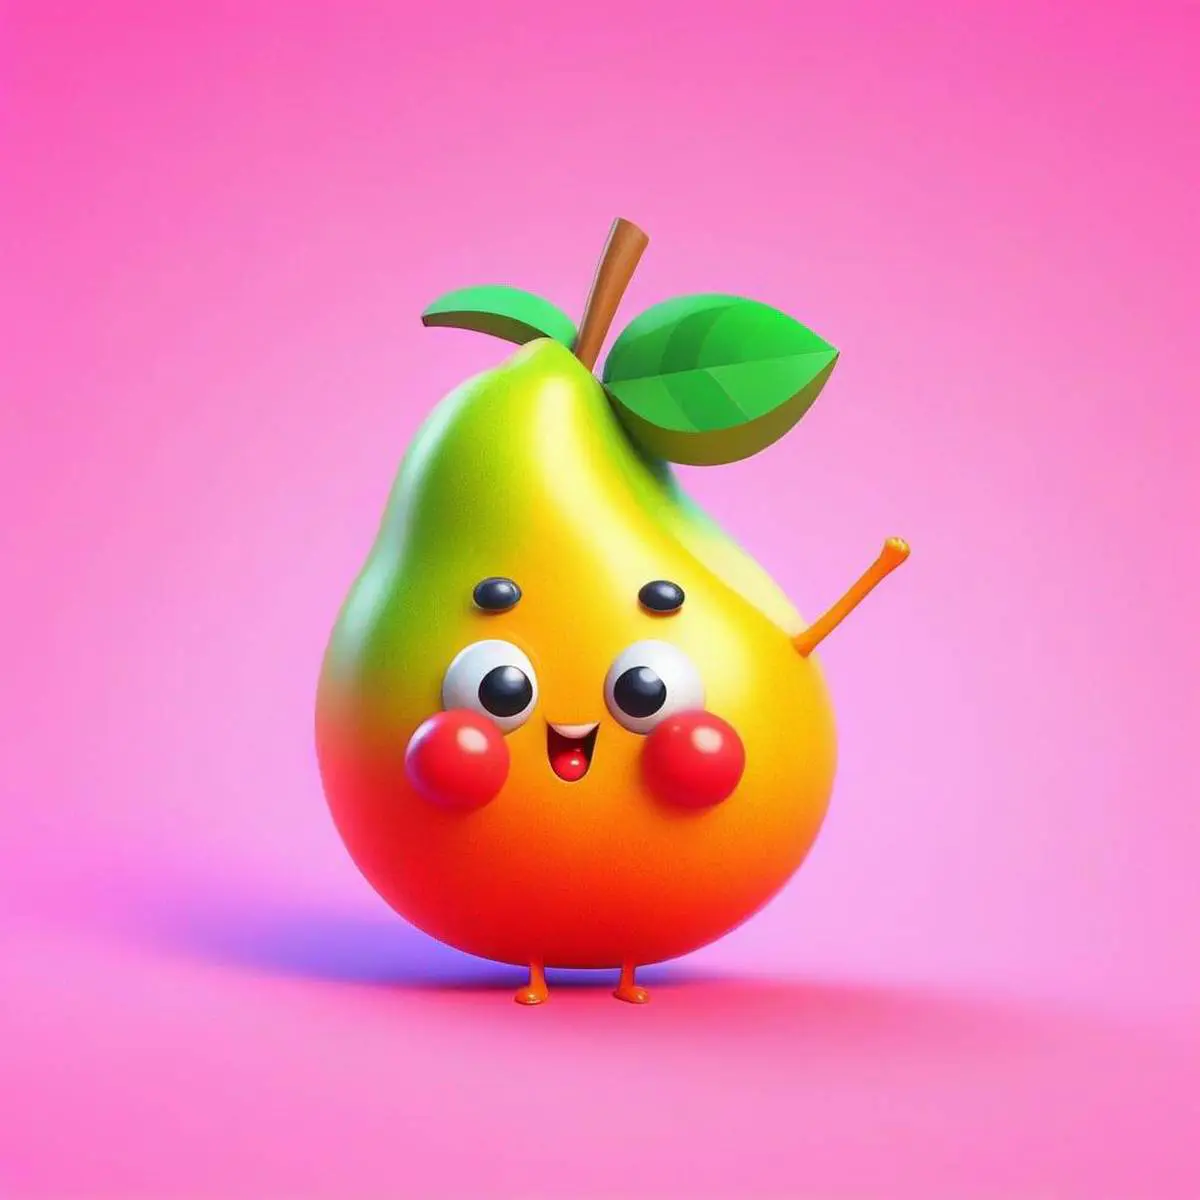 Fruit puns